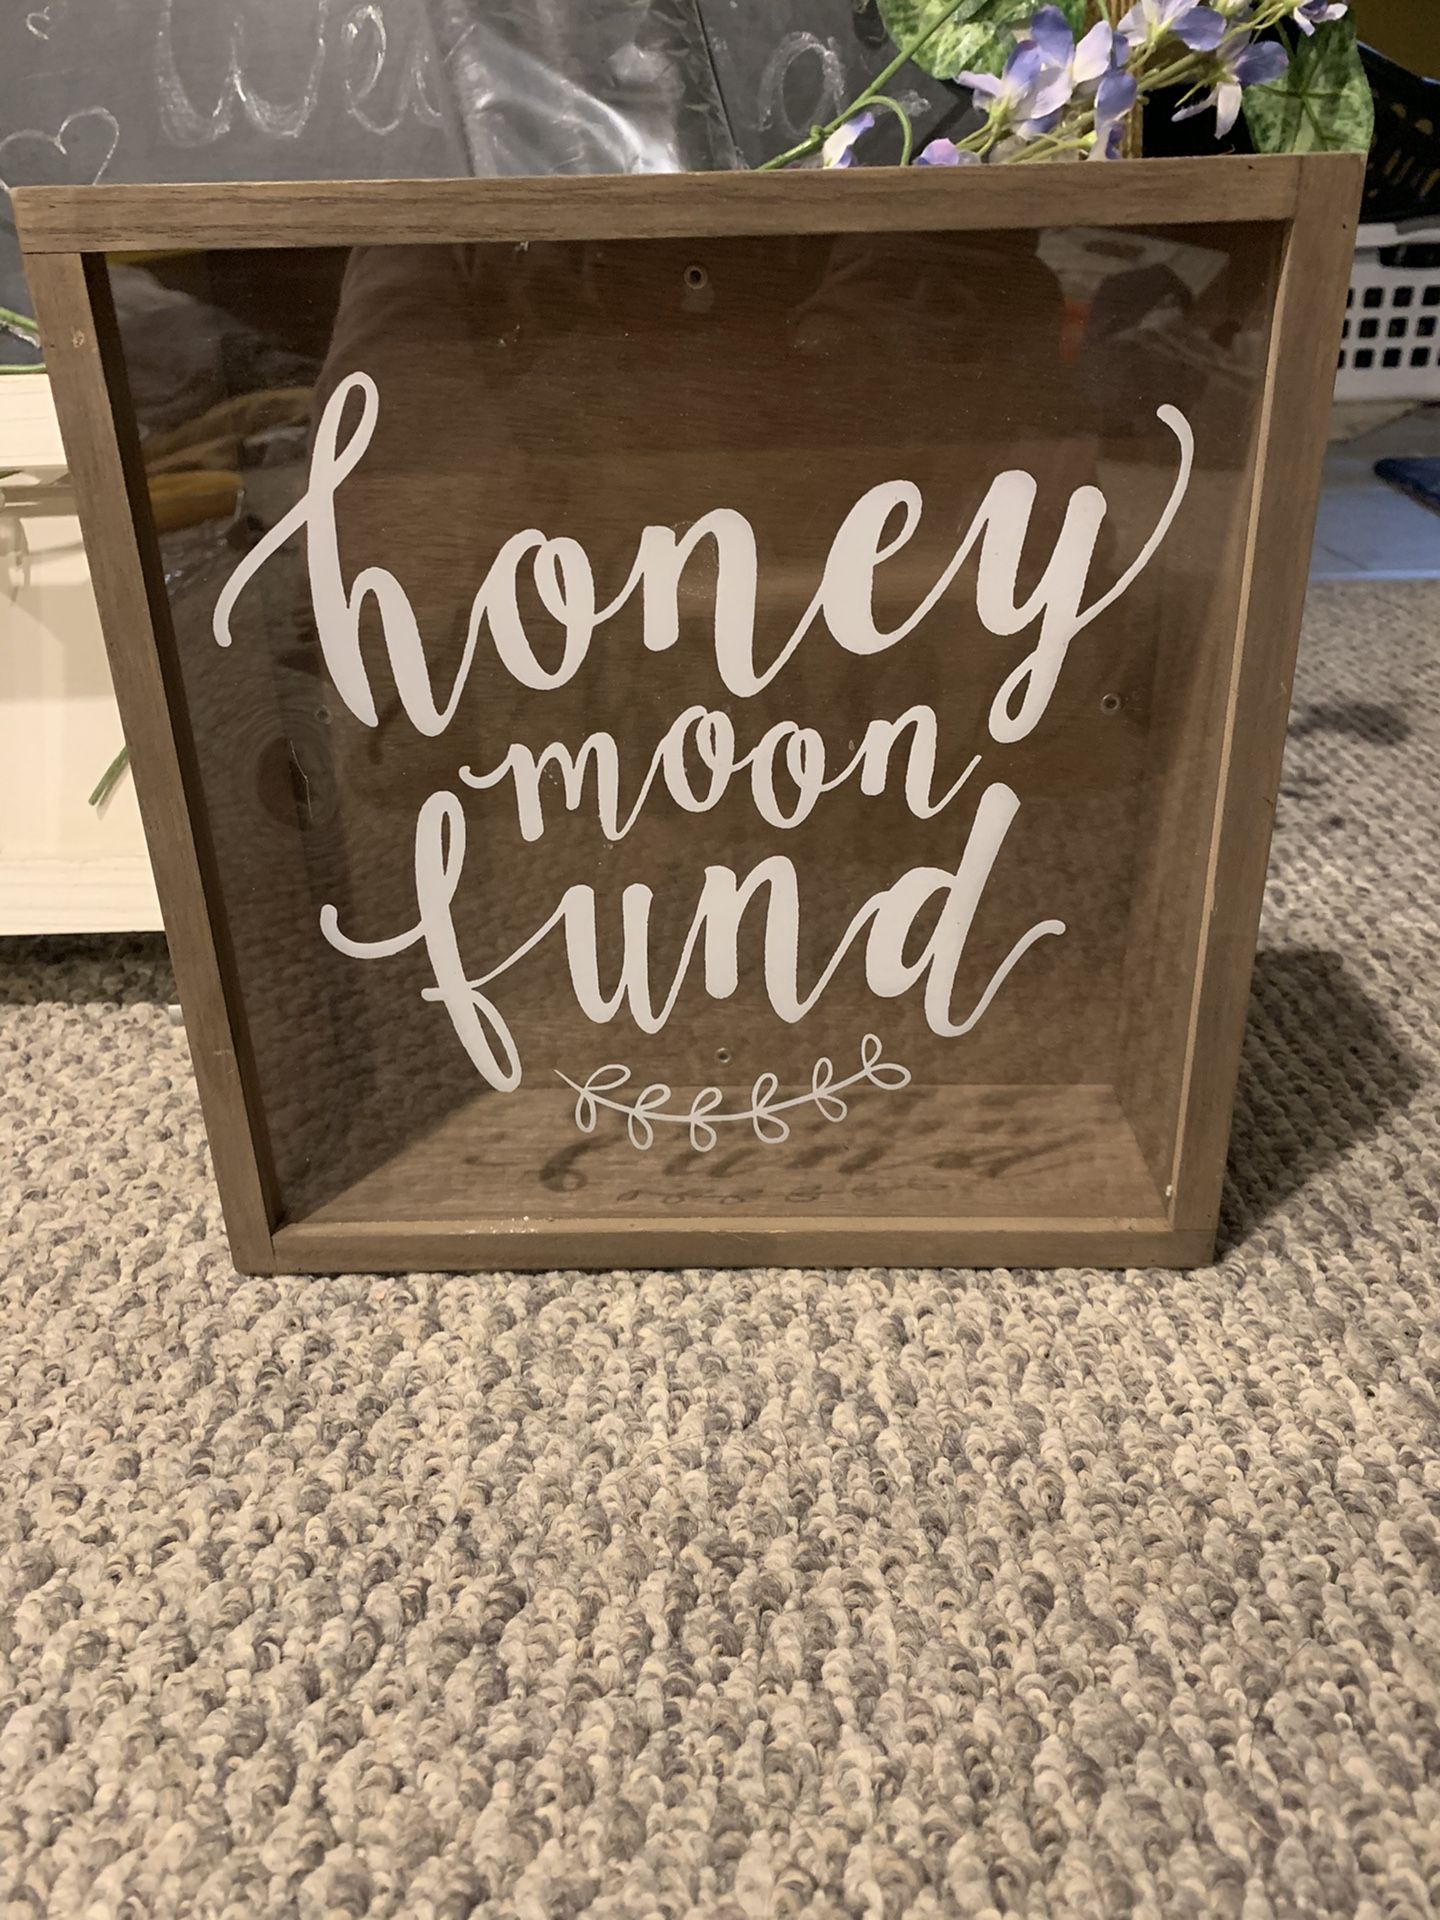 Honey moon fund box